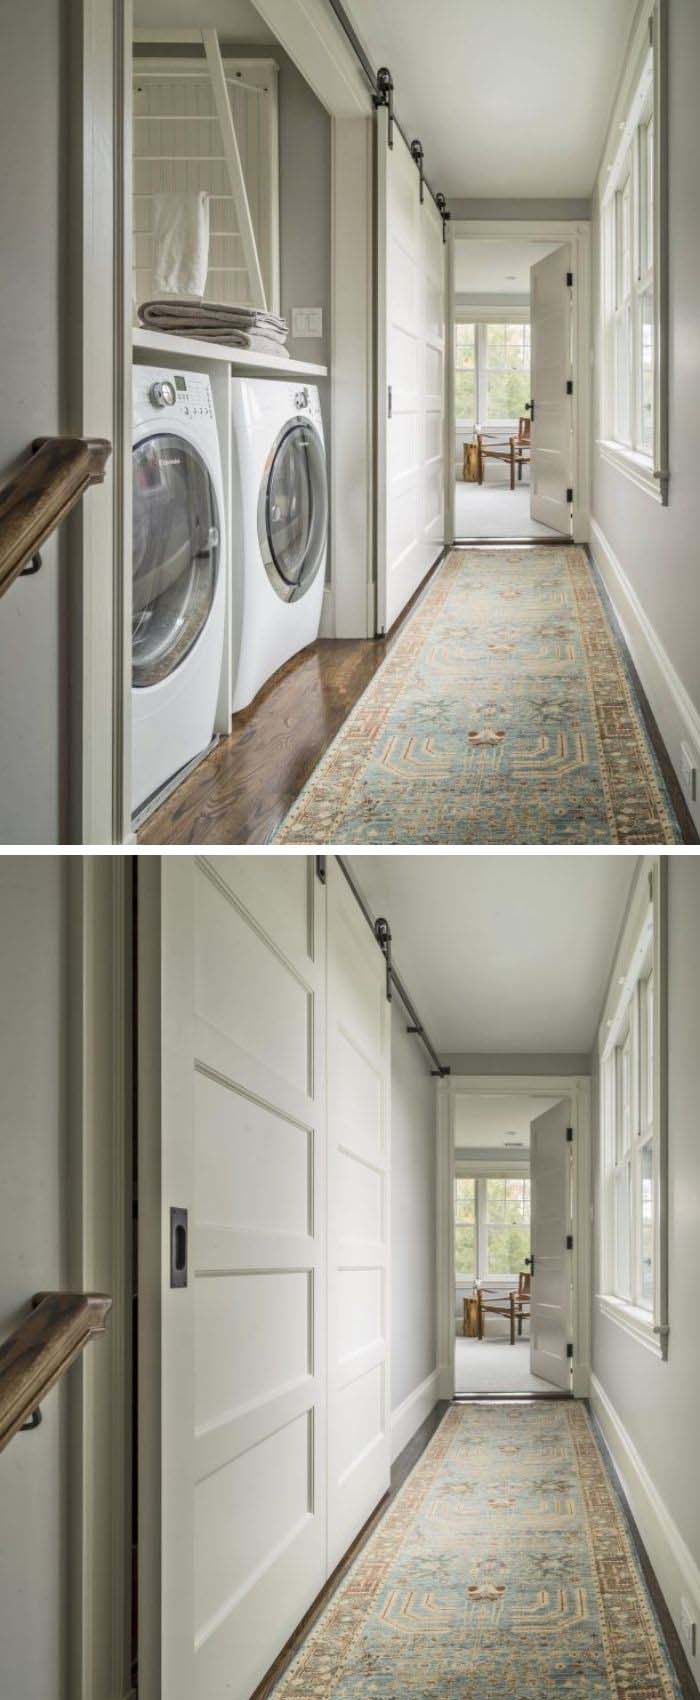 Sliding Door for Laundry Closet in a Narrow Place #laundry #closetdoors #decorhomeideas